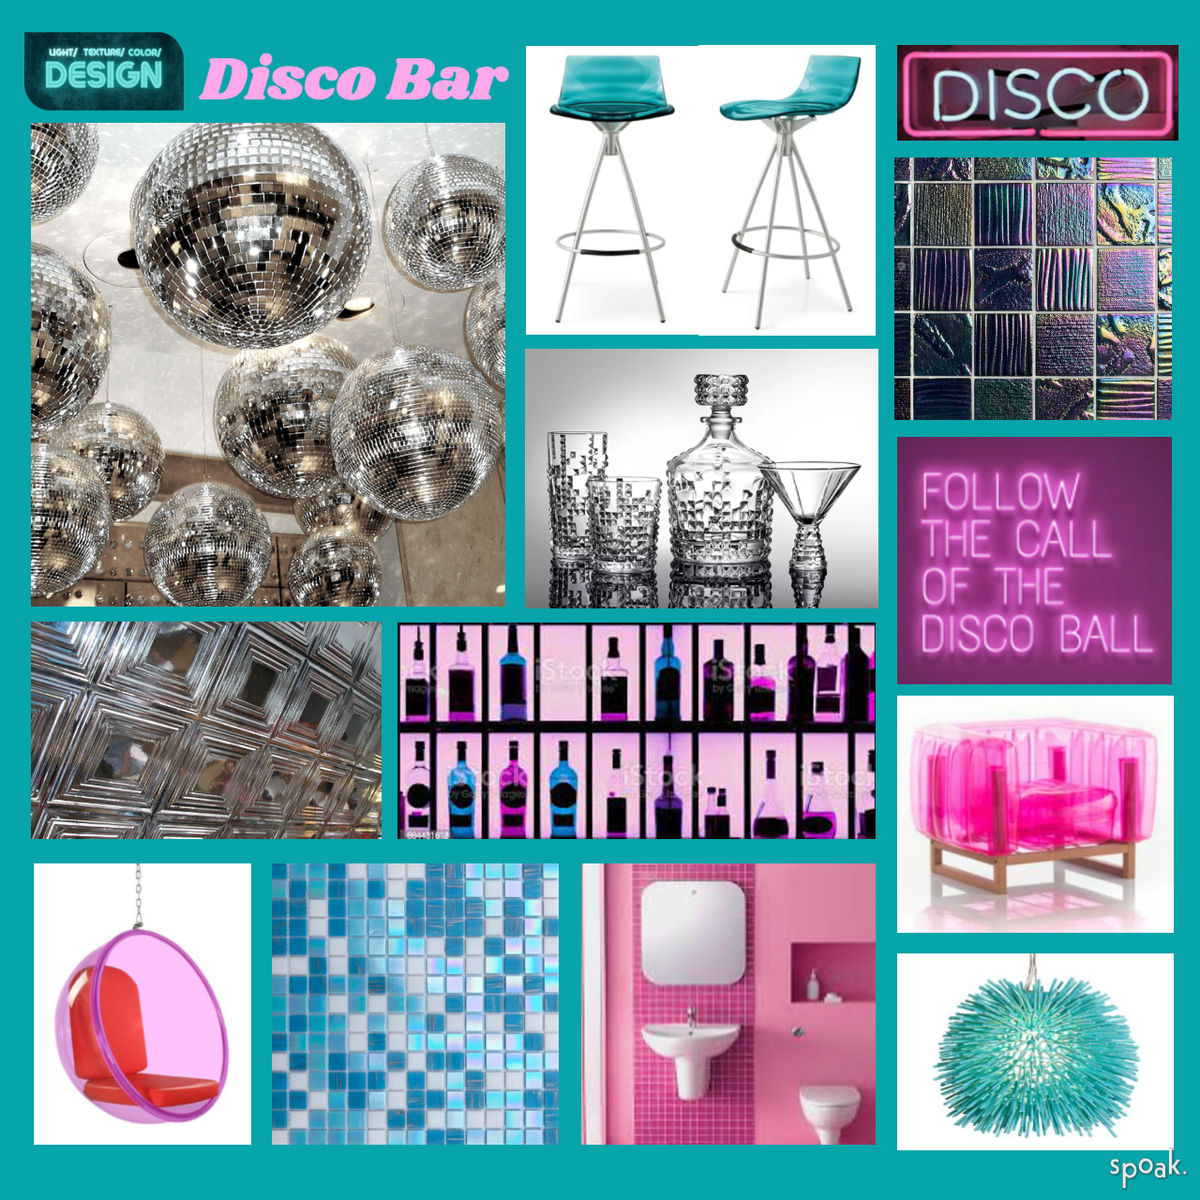 Disco Bar designed by Sarah Stanley